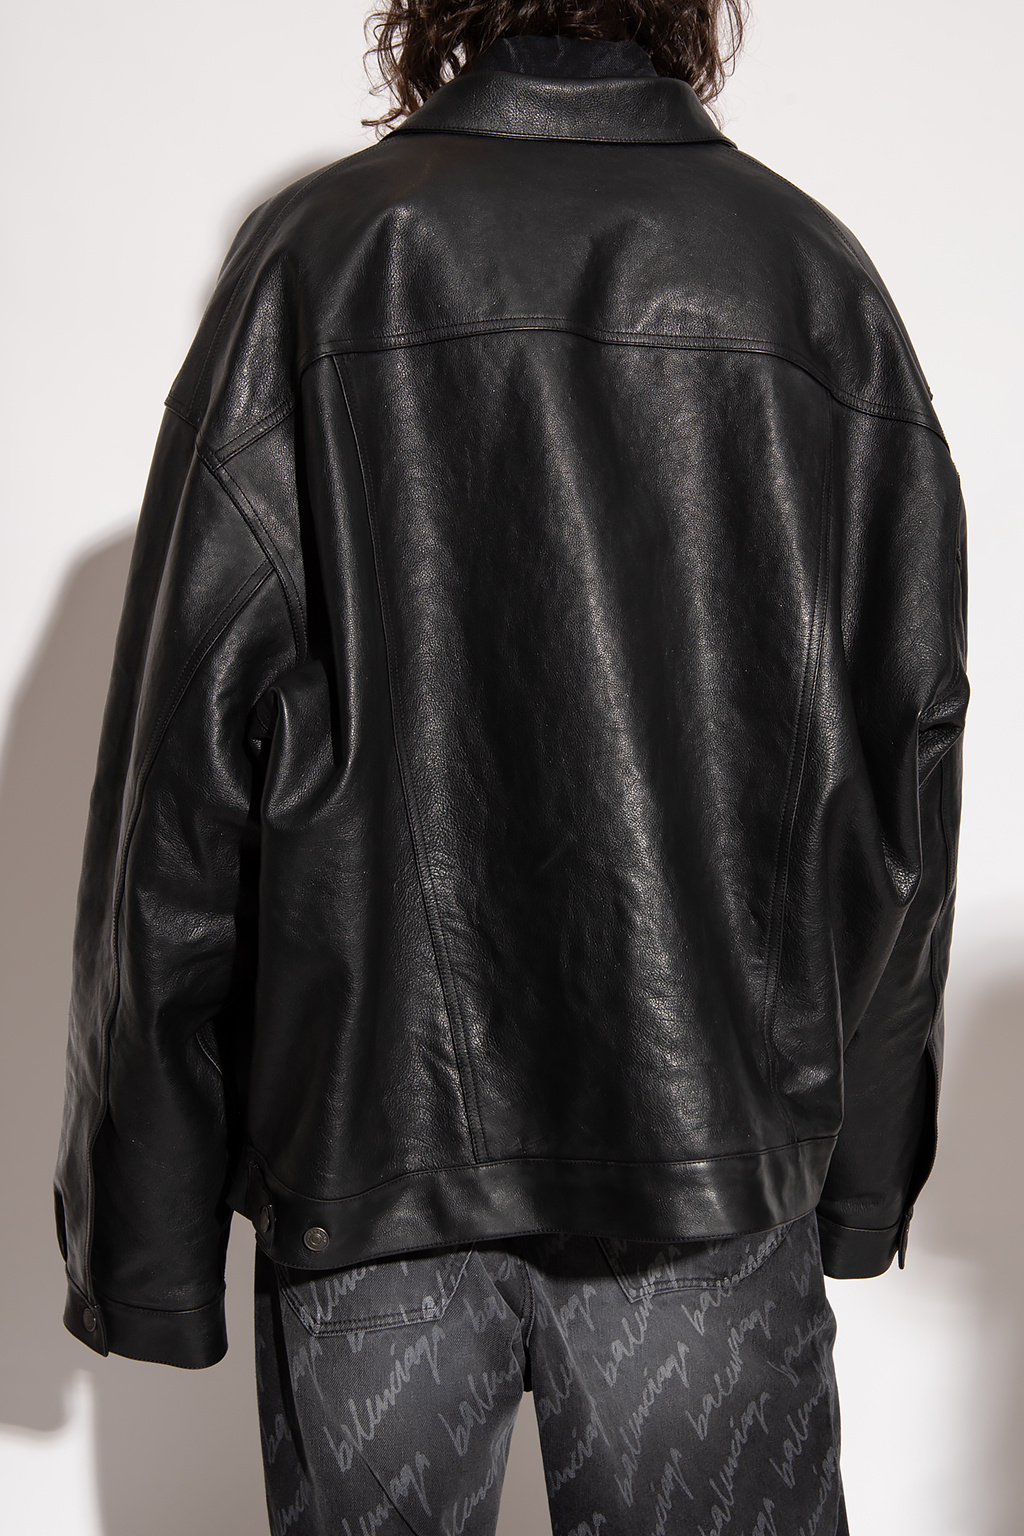 MultiscaleconsultingShops India  polo ralph lauren black sweatshirt  Leather  jacket Balenciaga